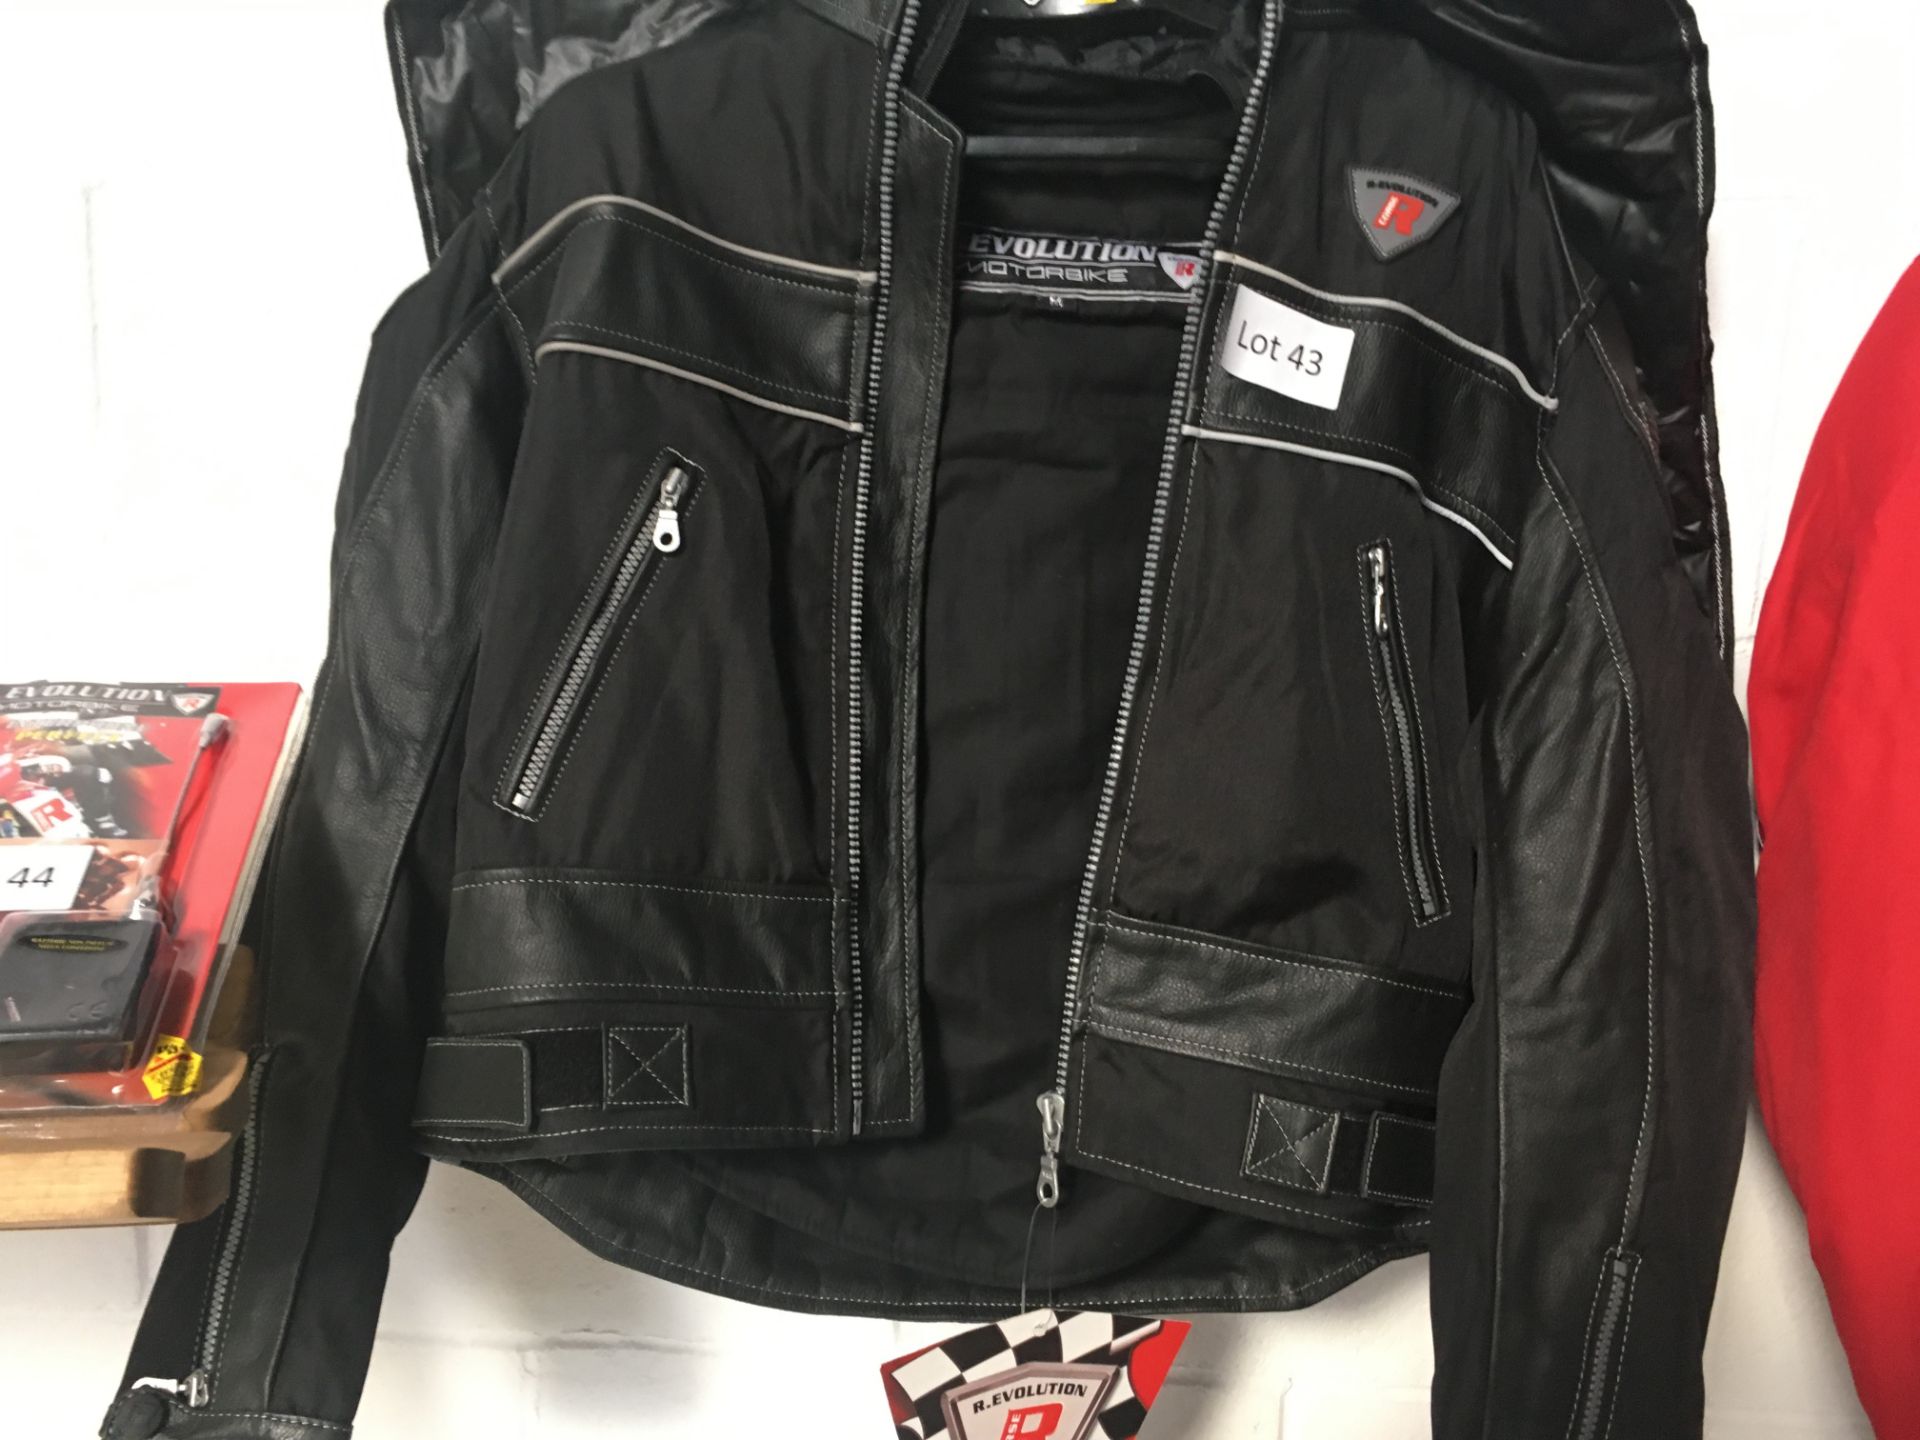 R.Evolution corseR mens motorcycle / quad bike jacket. Black colour. Size medium. New.